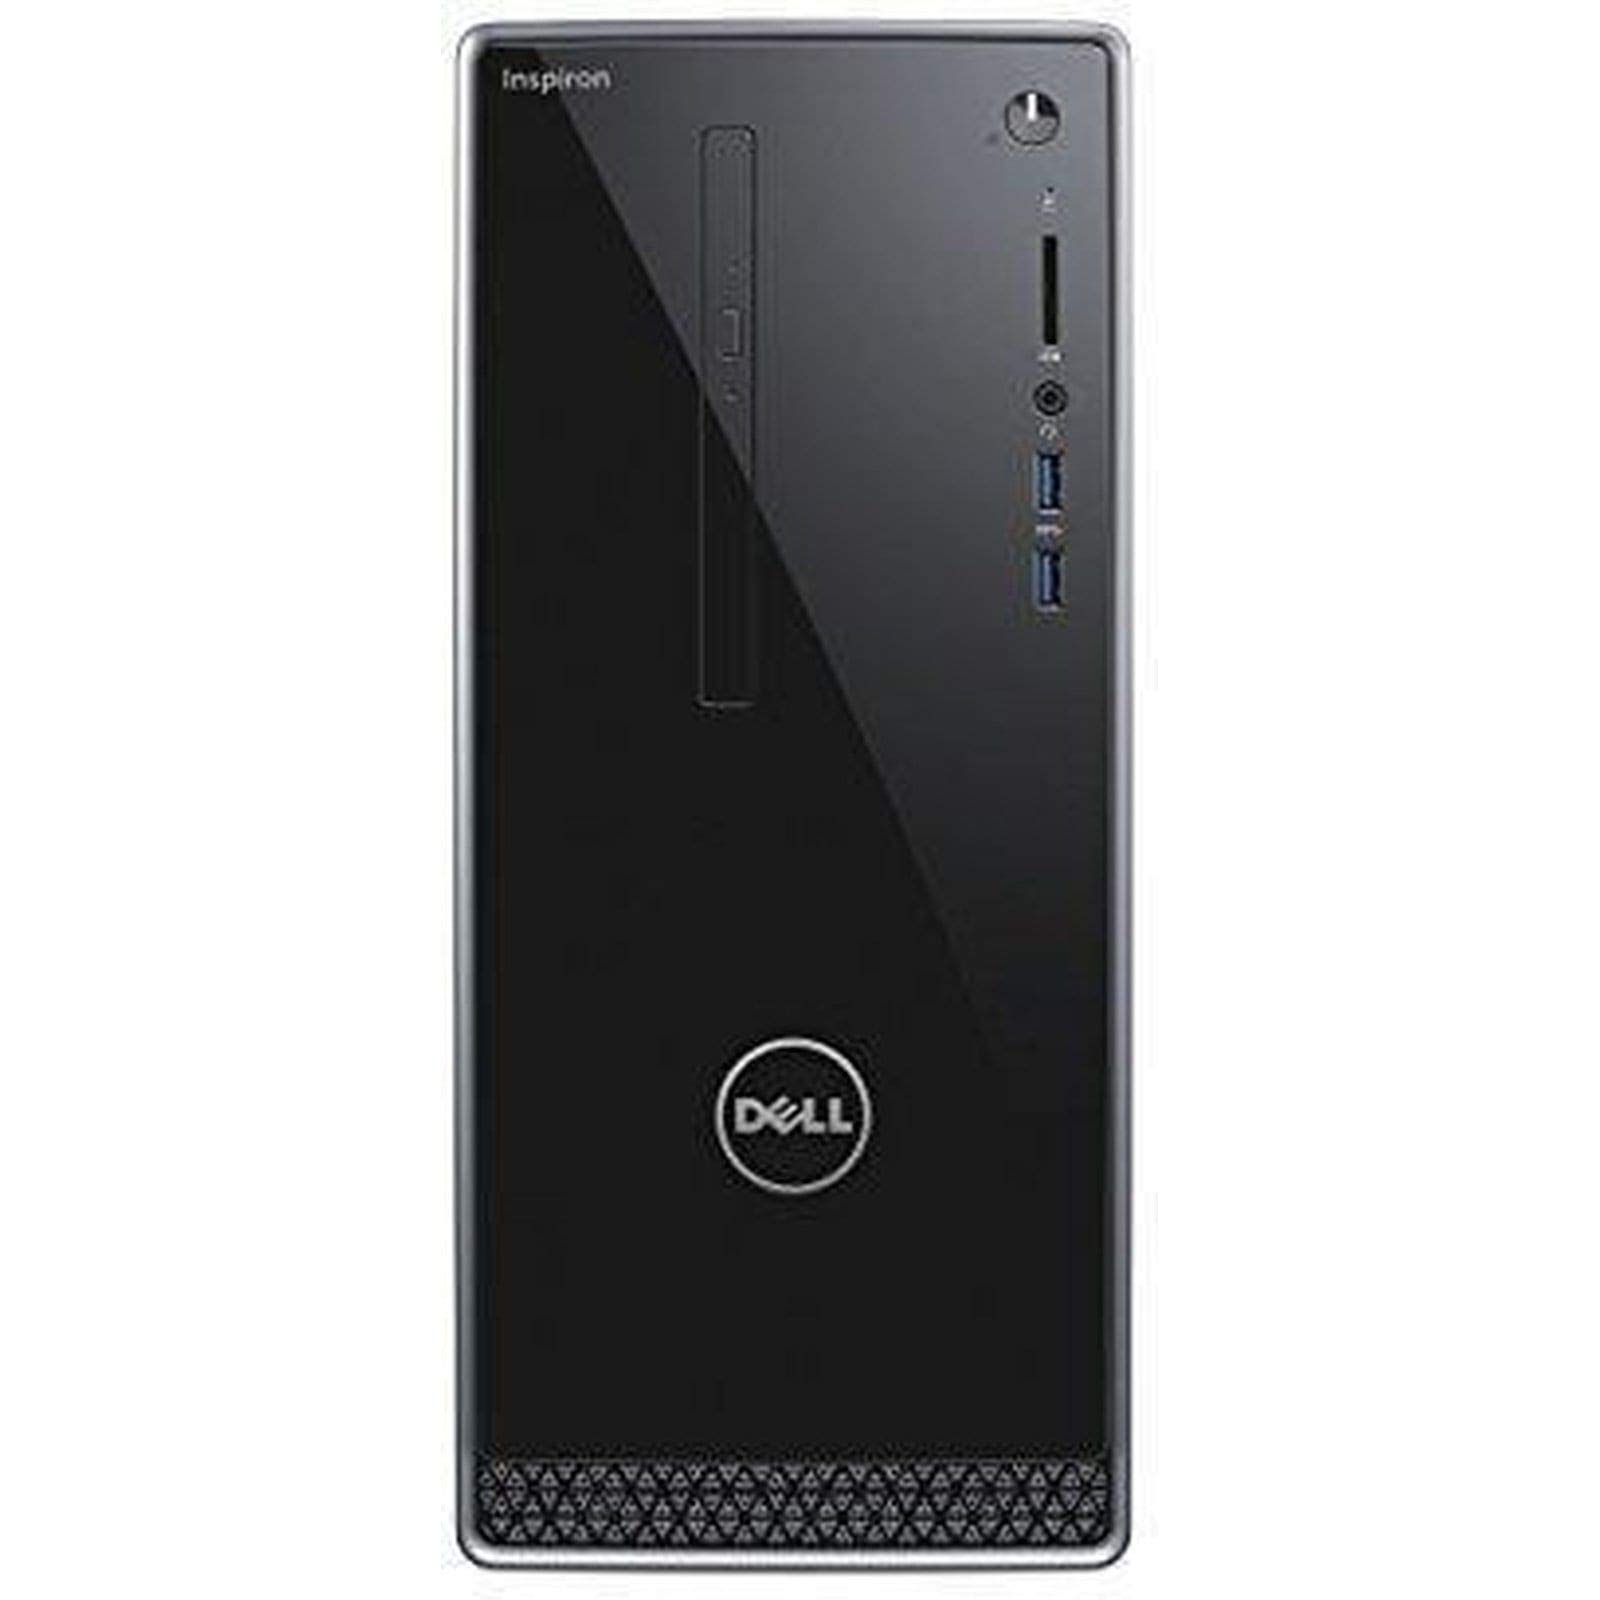 Dell i3668-5113BLK Desktop Computer - Inspiron 3668 Core i5 i5 7400 12 GB RAM 1 TB HDD Black Windows 10 Home 64 bit DVD Writer (Renewed)